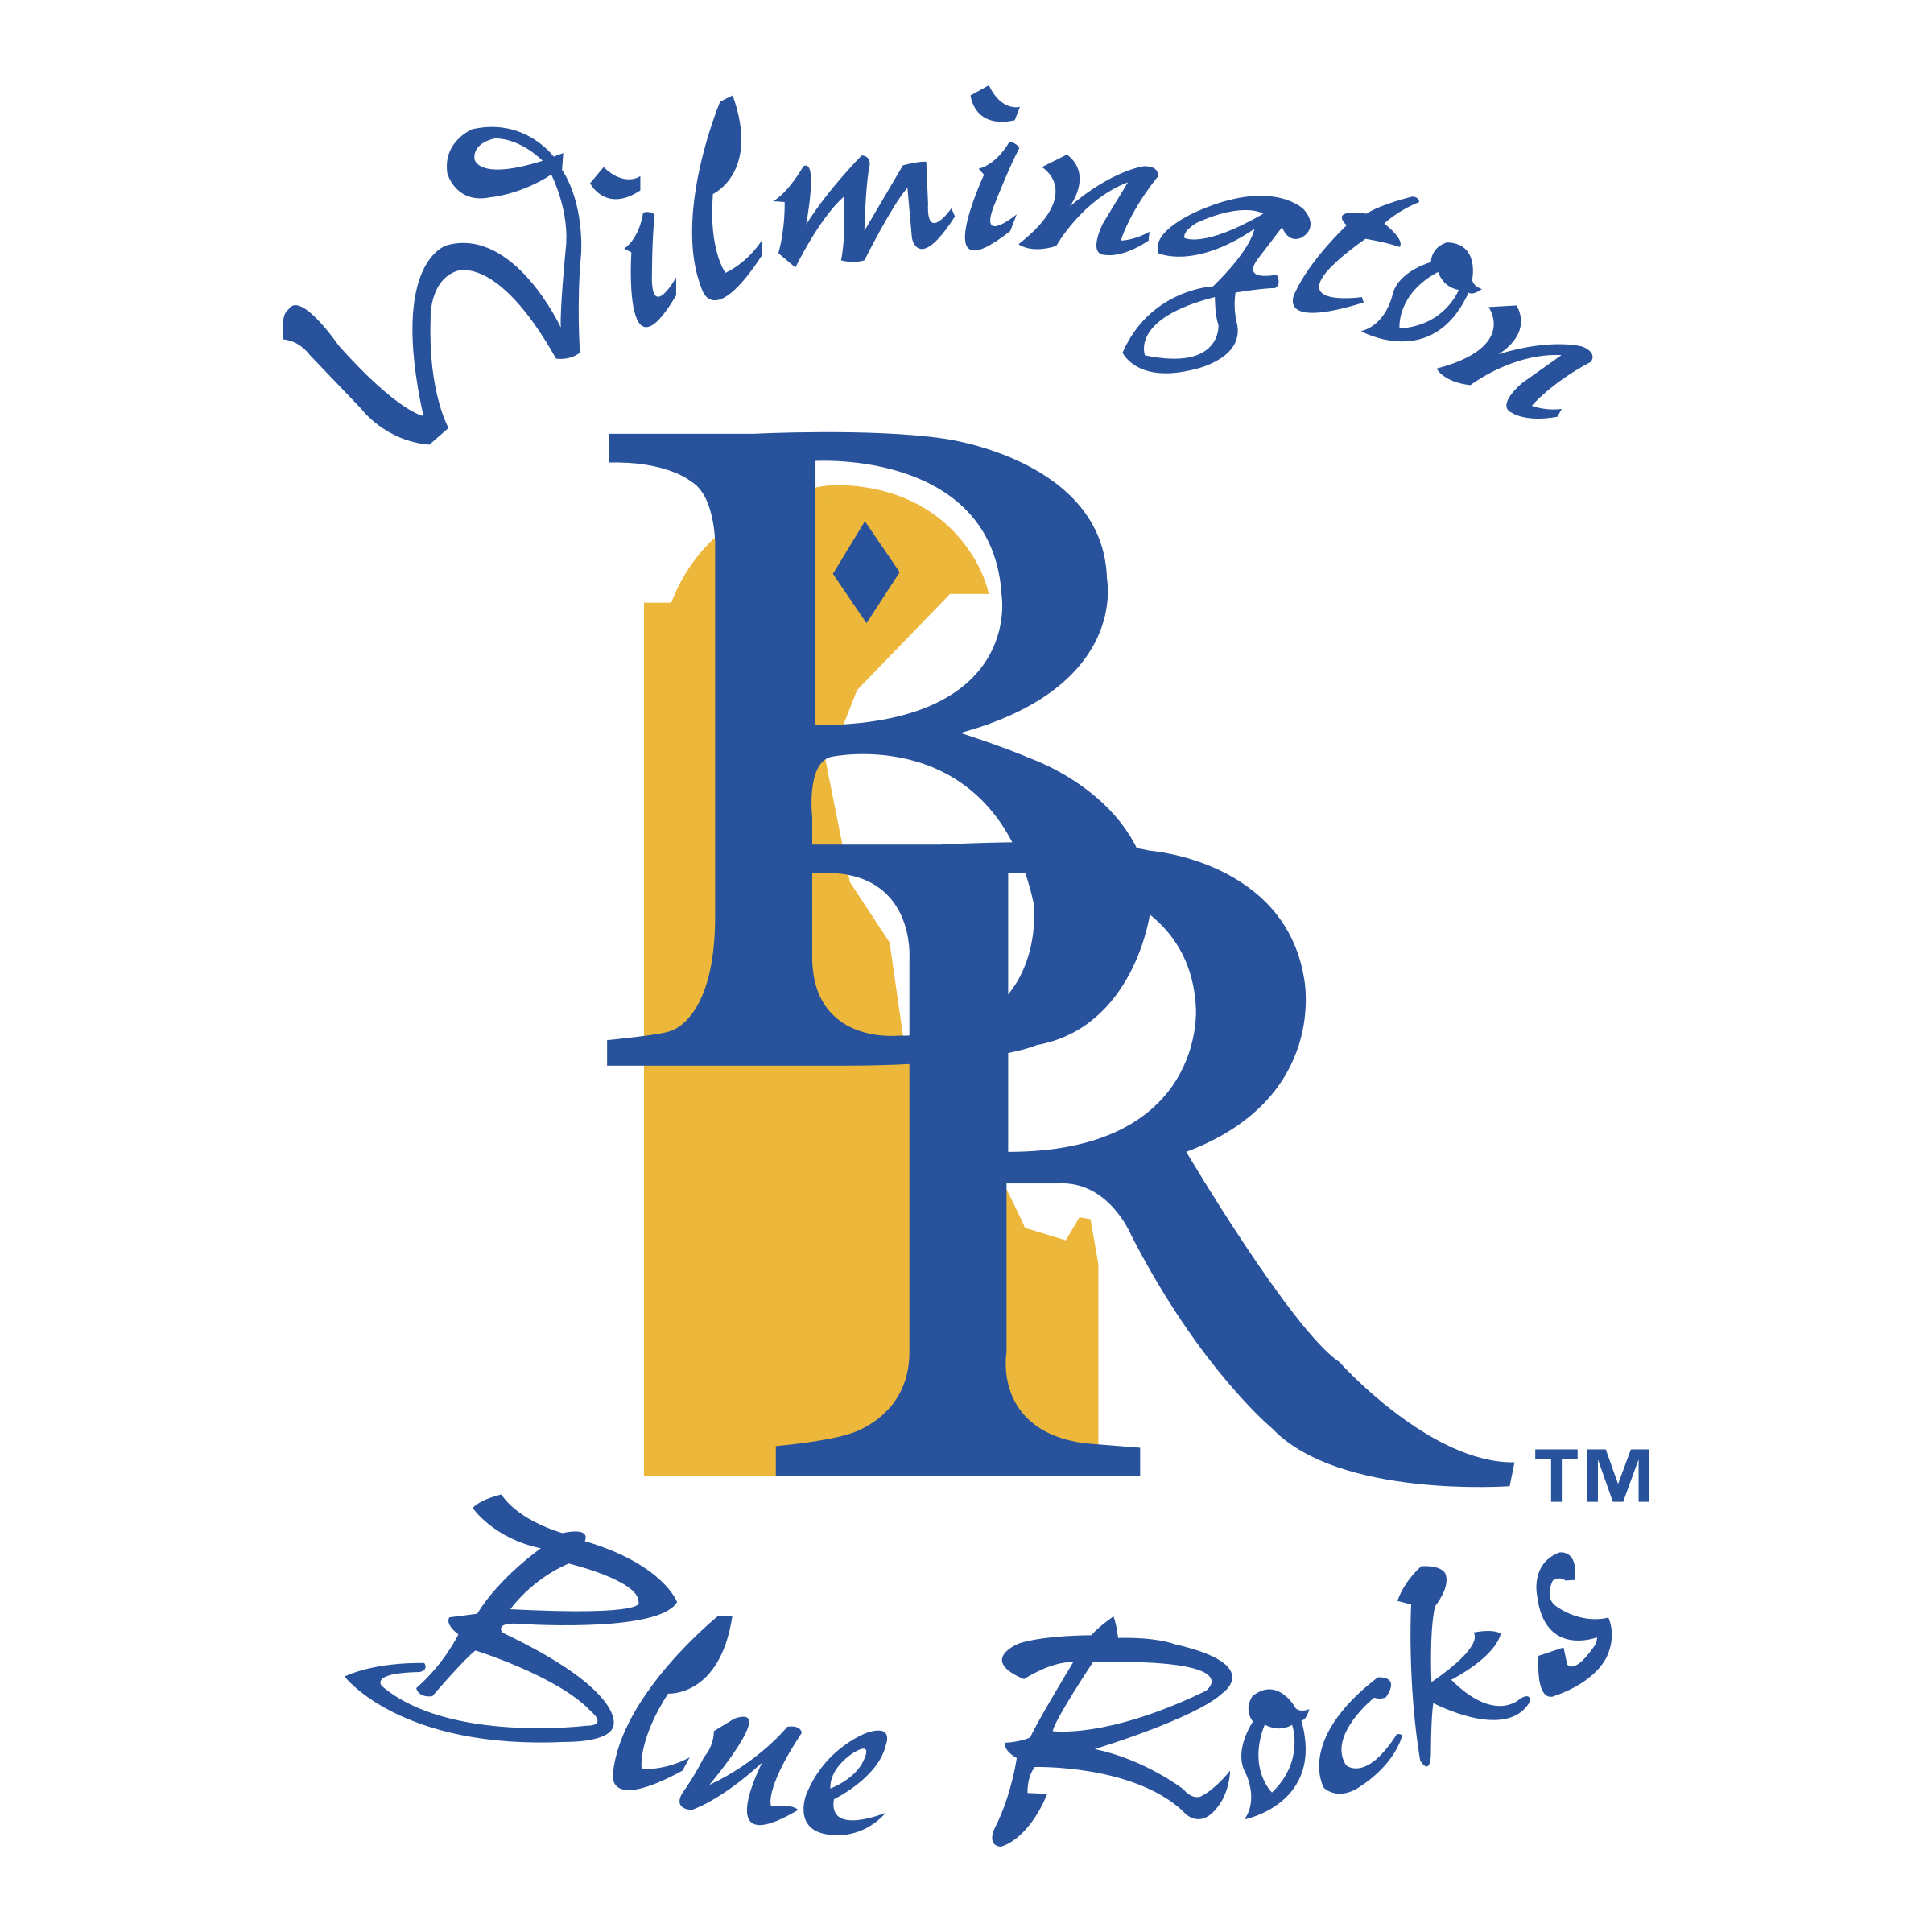 Wilmington Blue Rocks Background PNG Image